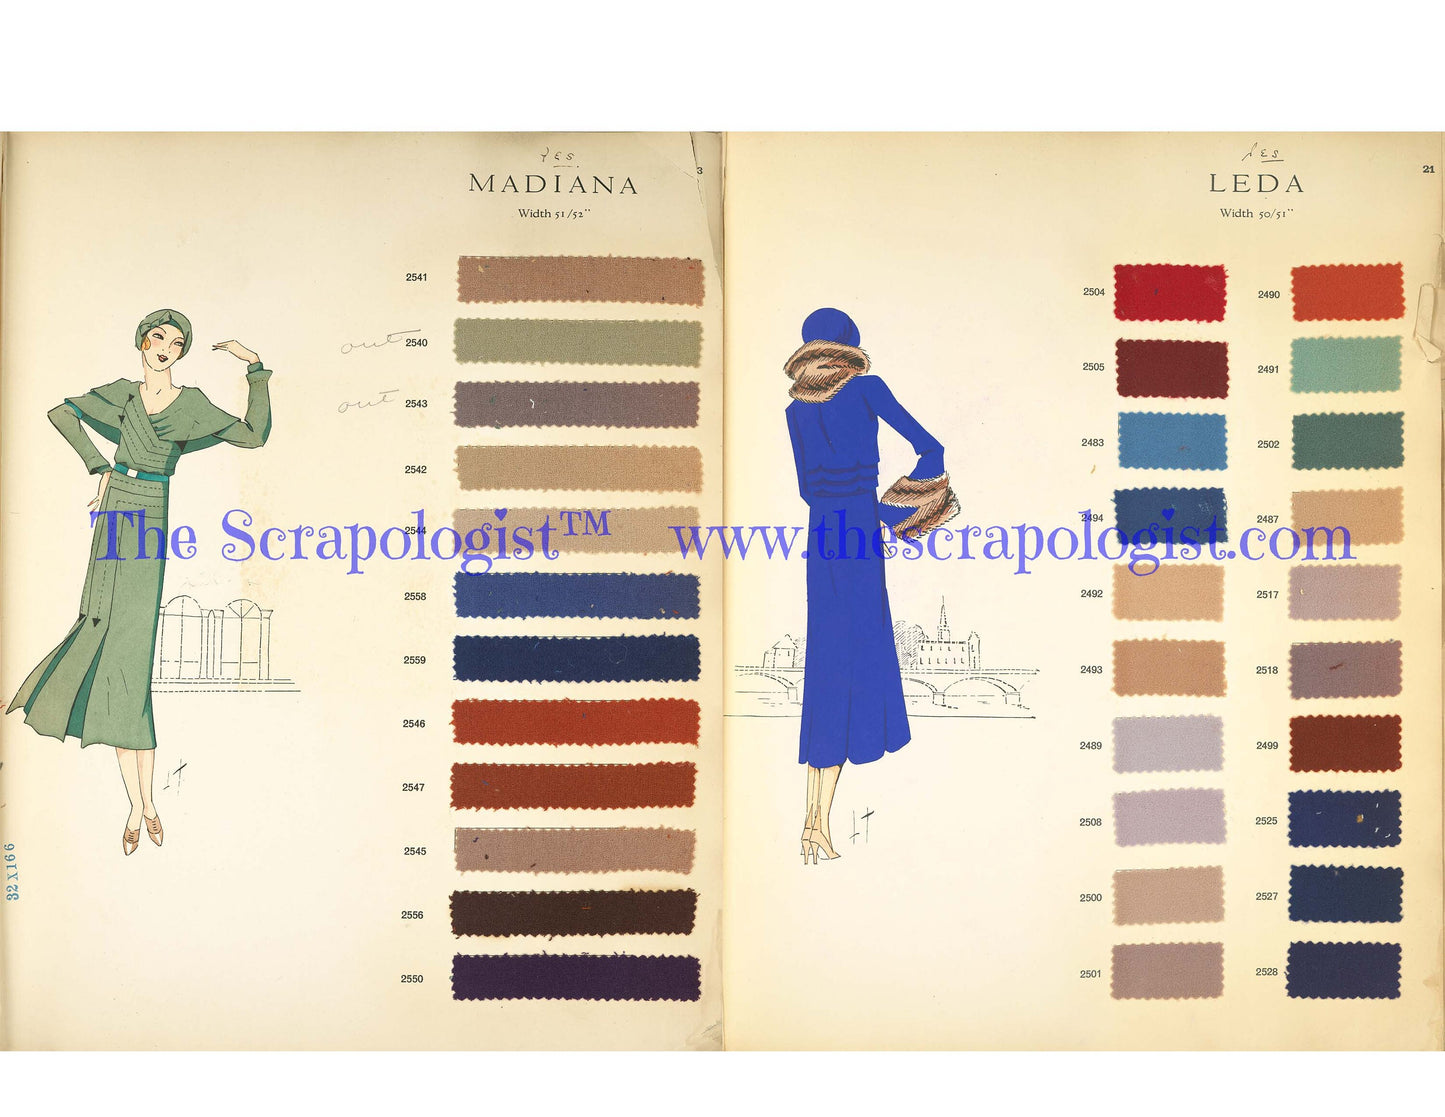 Vintage French Fashions, Textile Fabric Swatches, Printable Junk Journal Ephemera Kit | Digital Download